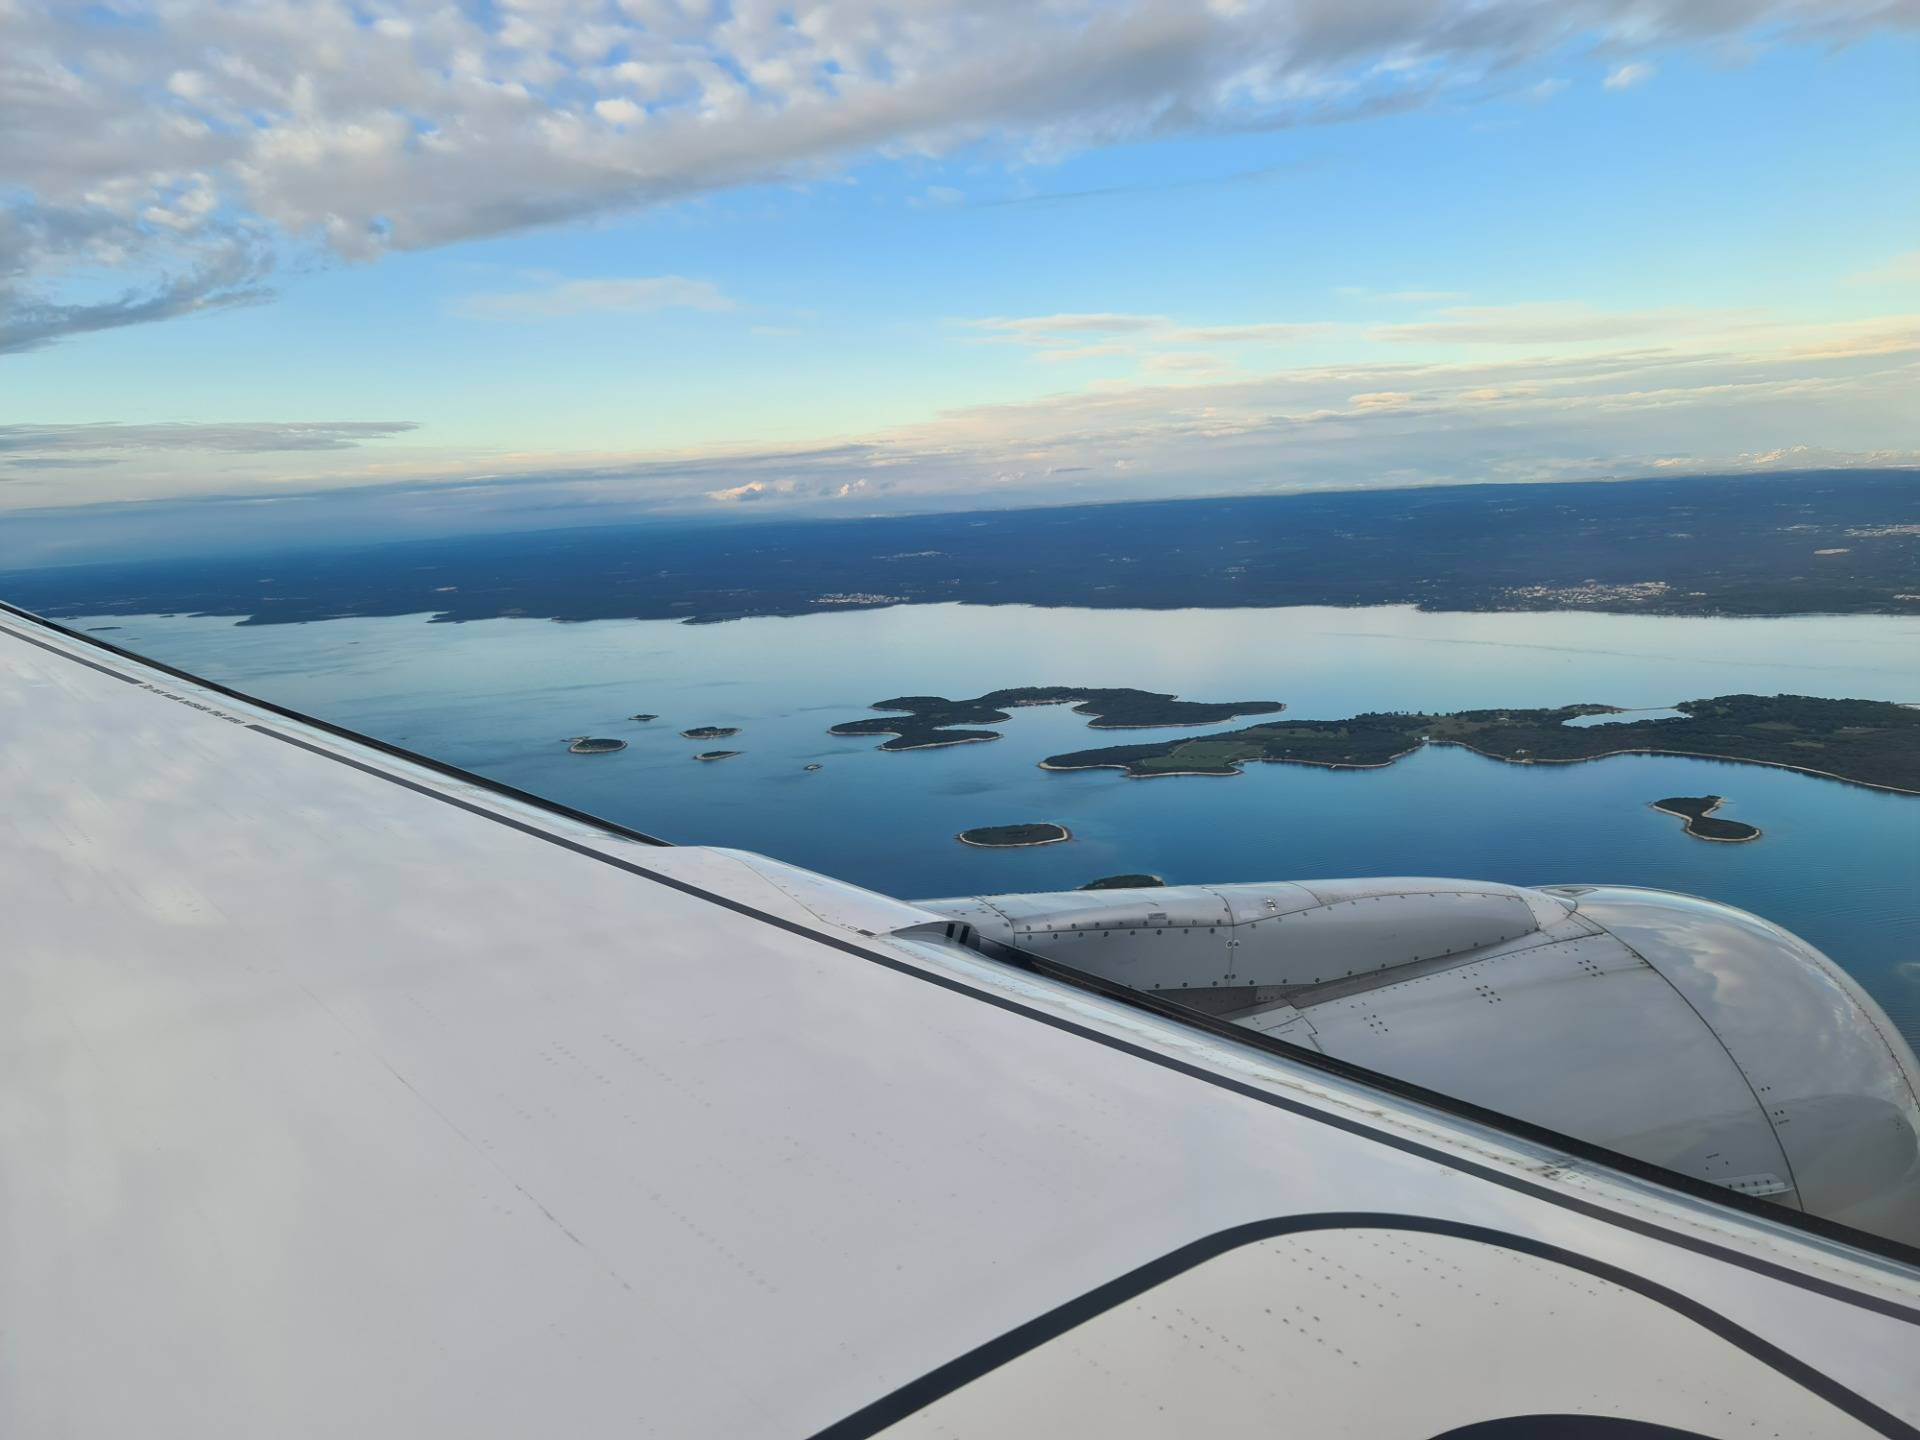 Croatia Islands from the airplane